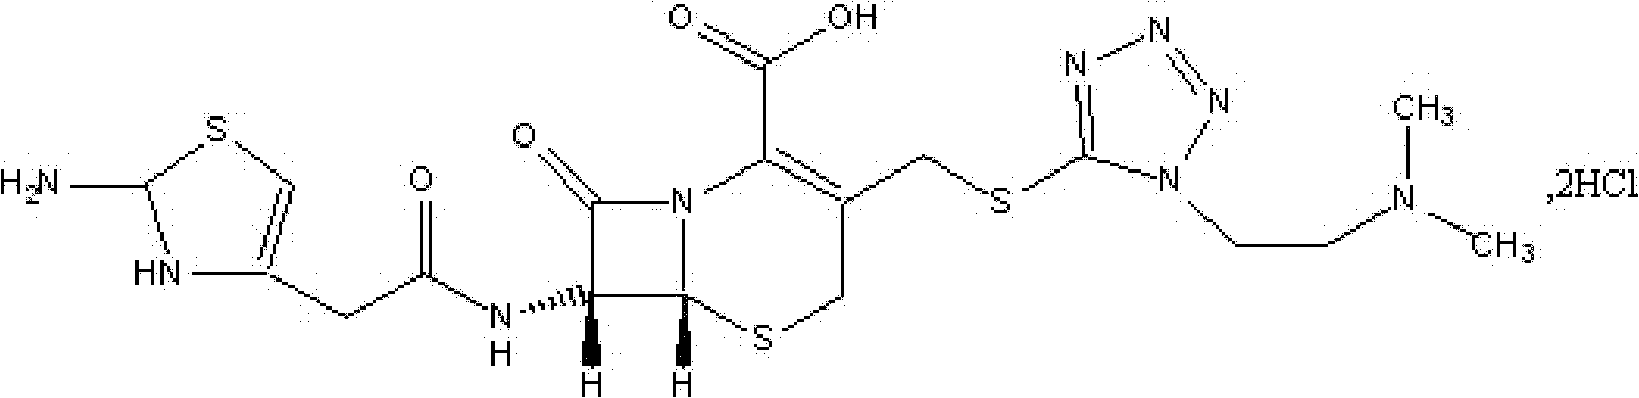 Cefotiam-hydrochloride-containing medicine preparation and preparation method thereof